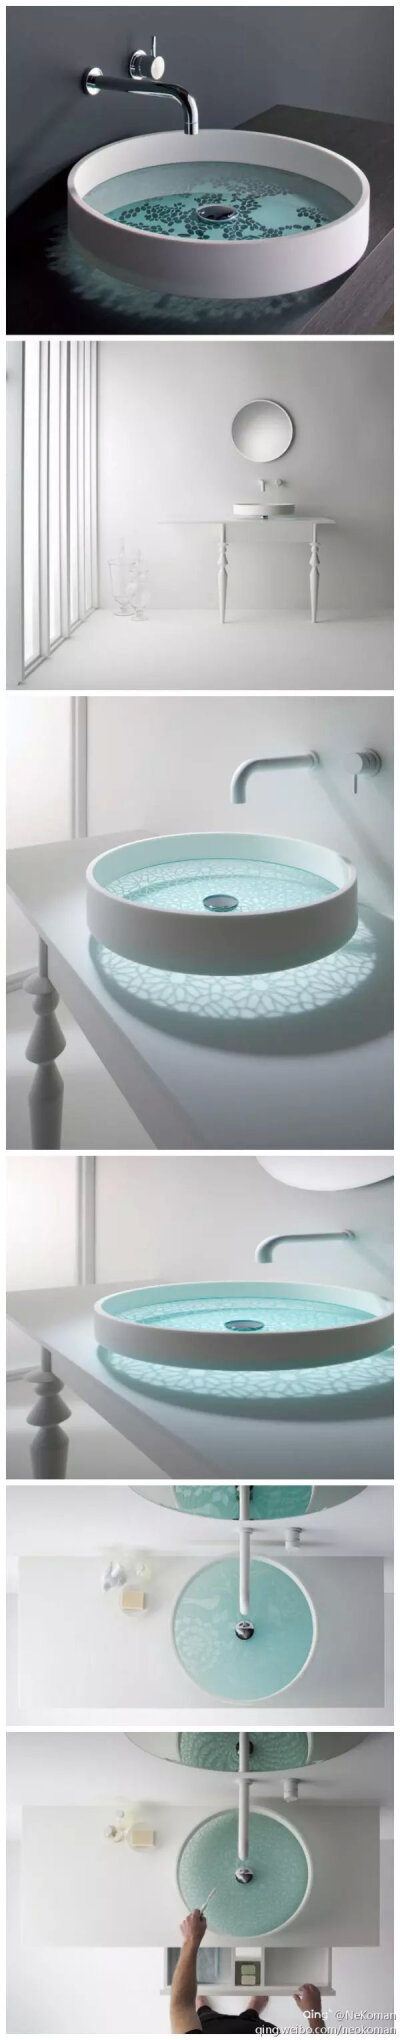 Motif Basin波光粼粼的光影洗手池设计